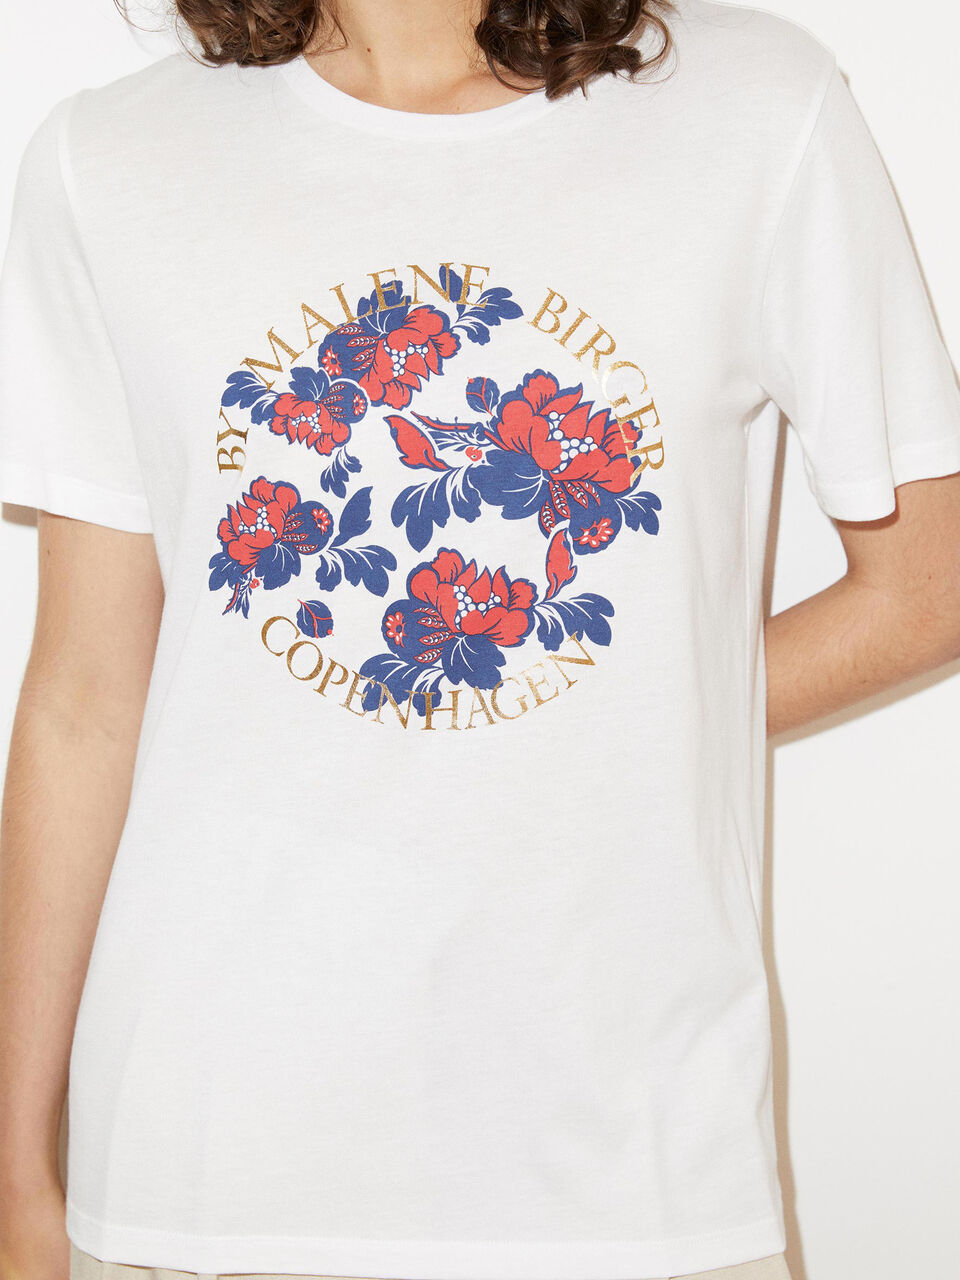 Azalea t-shirt - Buy online